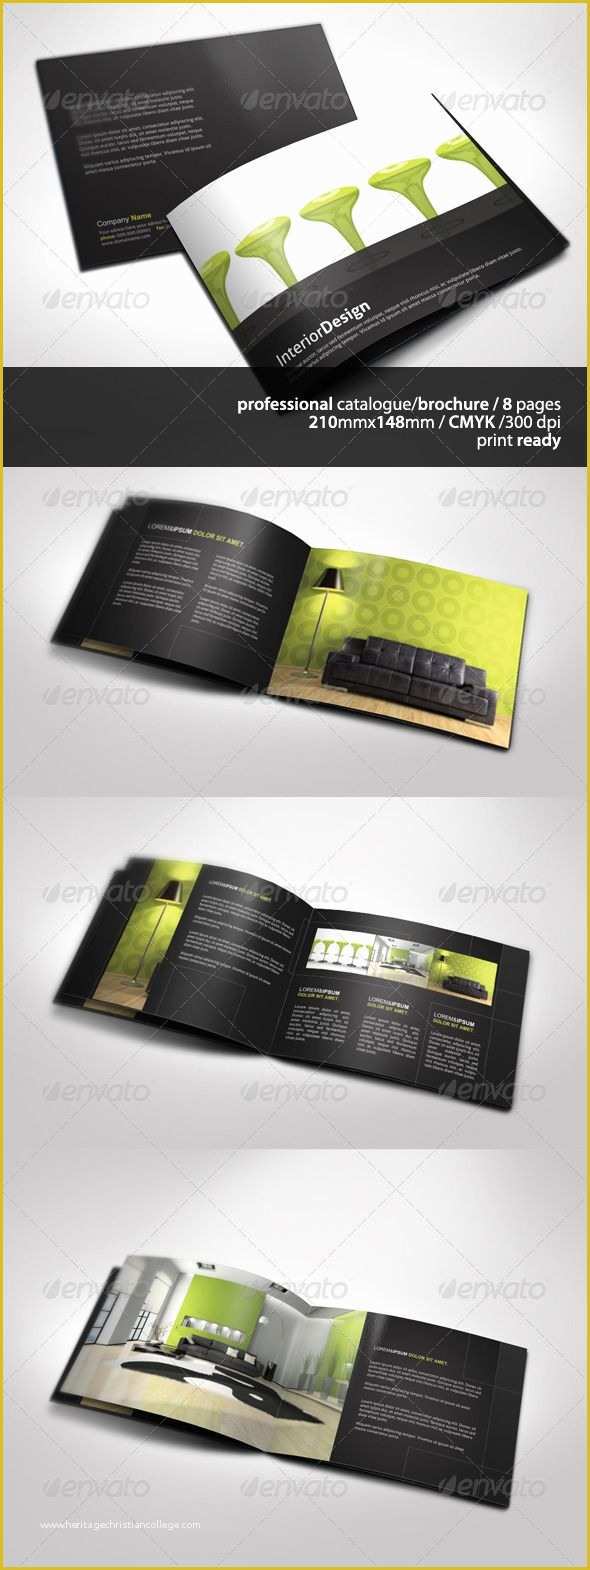 A5 Size Brochure Templates Psd Free Download Of A5 Brochure Catalogue Pinterest